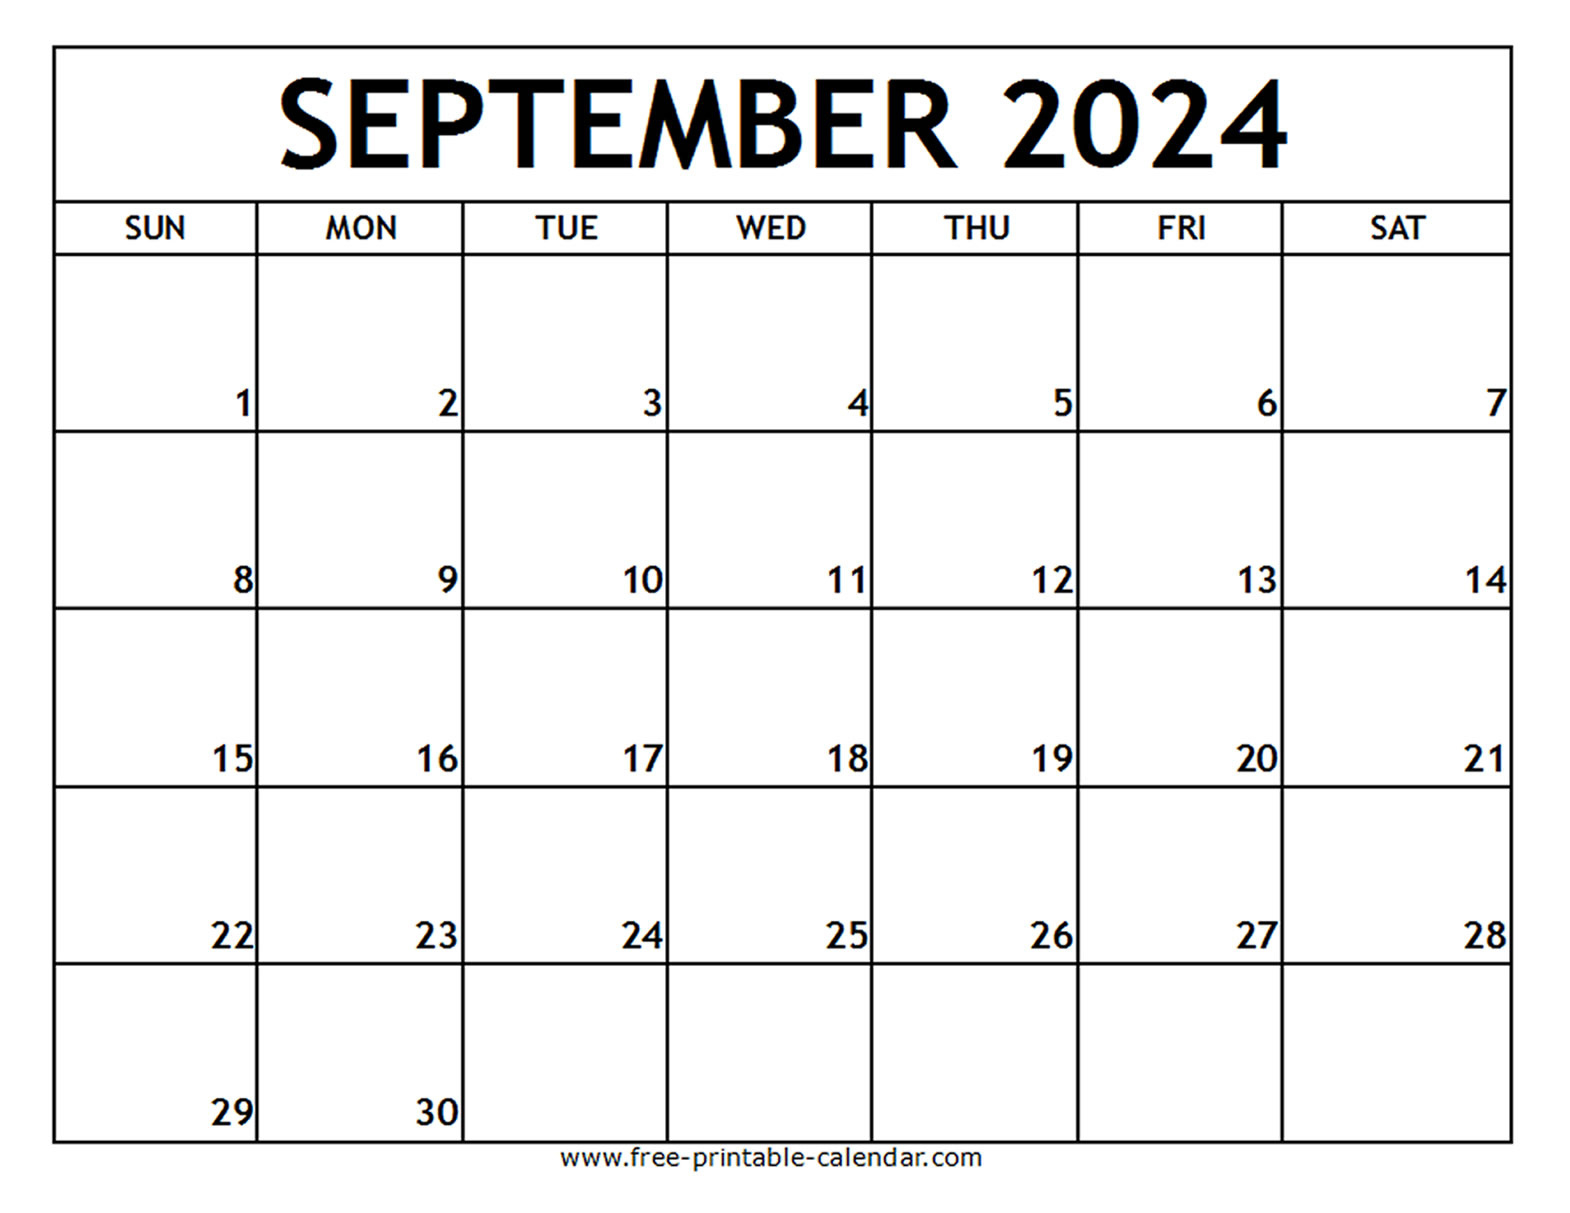 September 2024 Printable Calendar - Free-Printable-Calendar inside Free Printable Calendar 2024 Sep Oct Nov